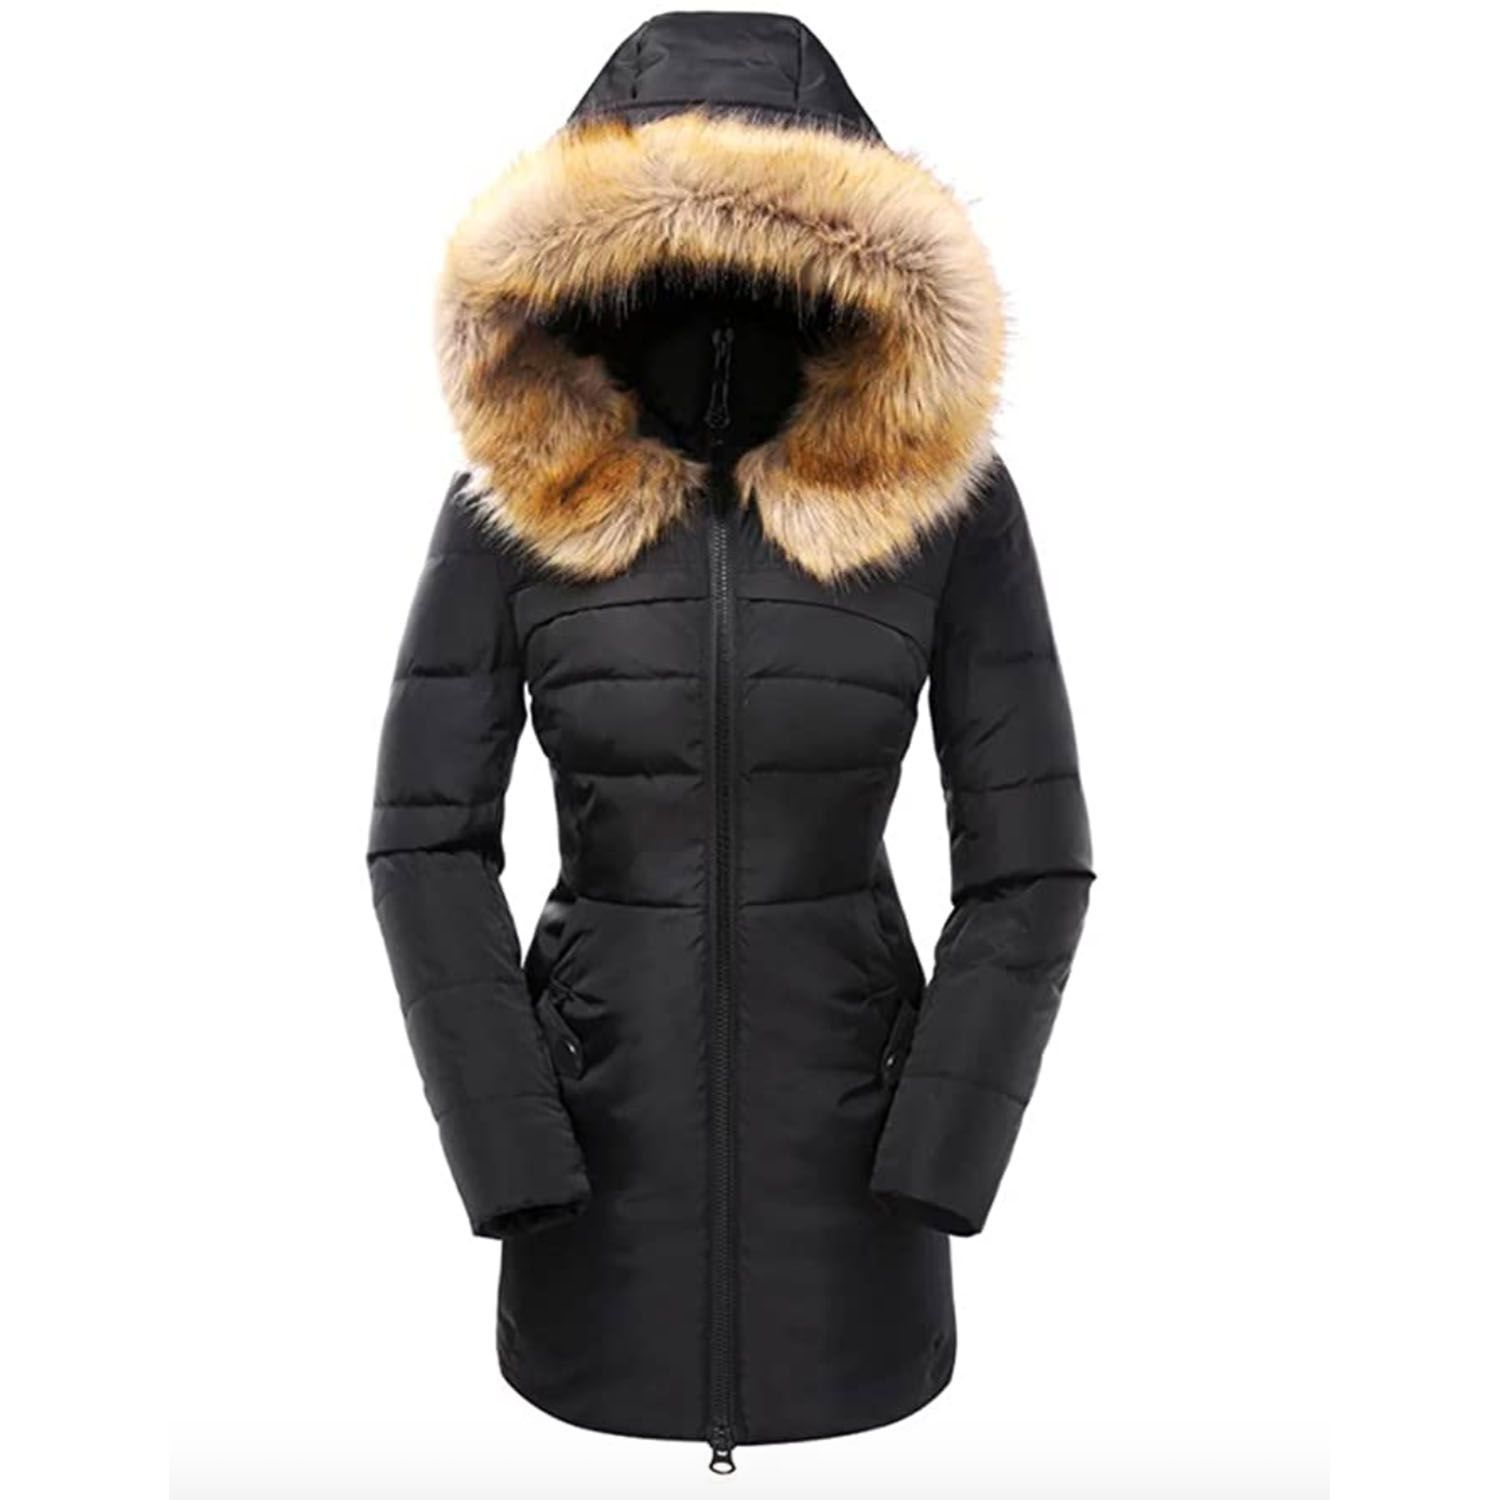 Women Ladies Slim Hooded Down Padded Long Winter Warm Parka Outwear Jacket Coat with Removable Faux Fur Hood